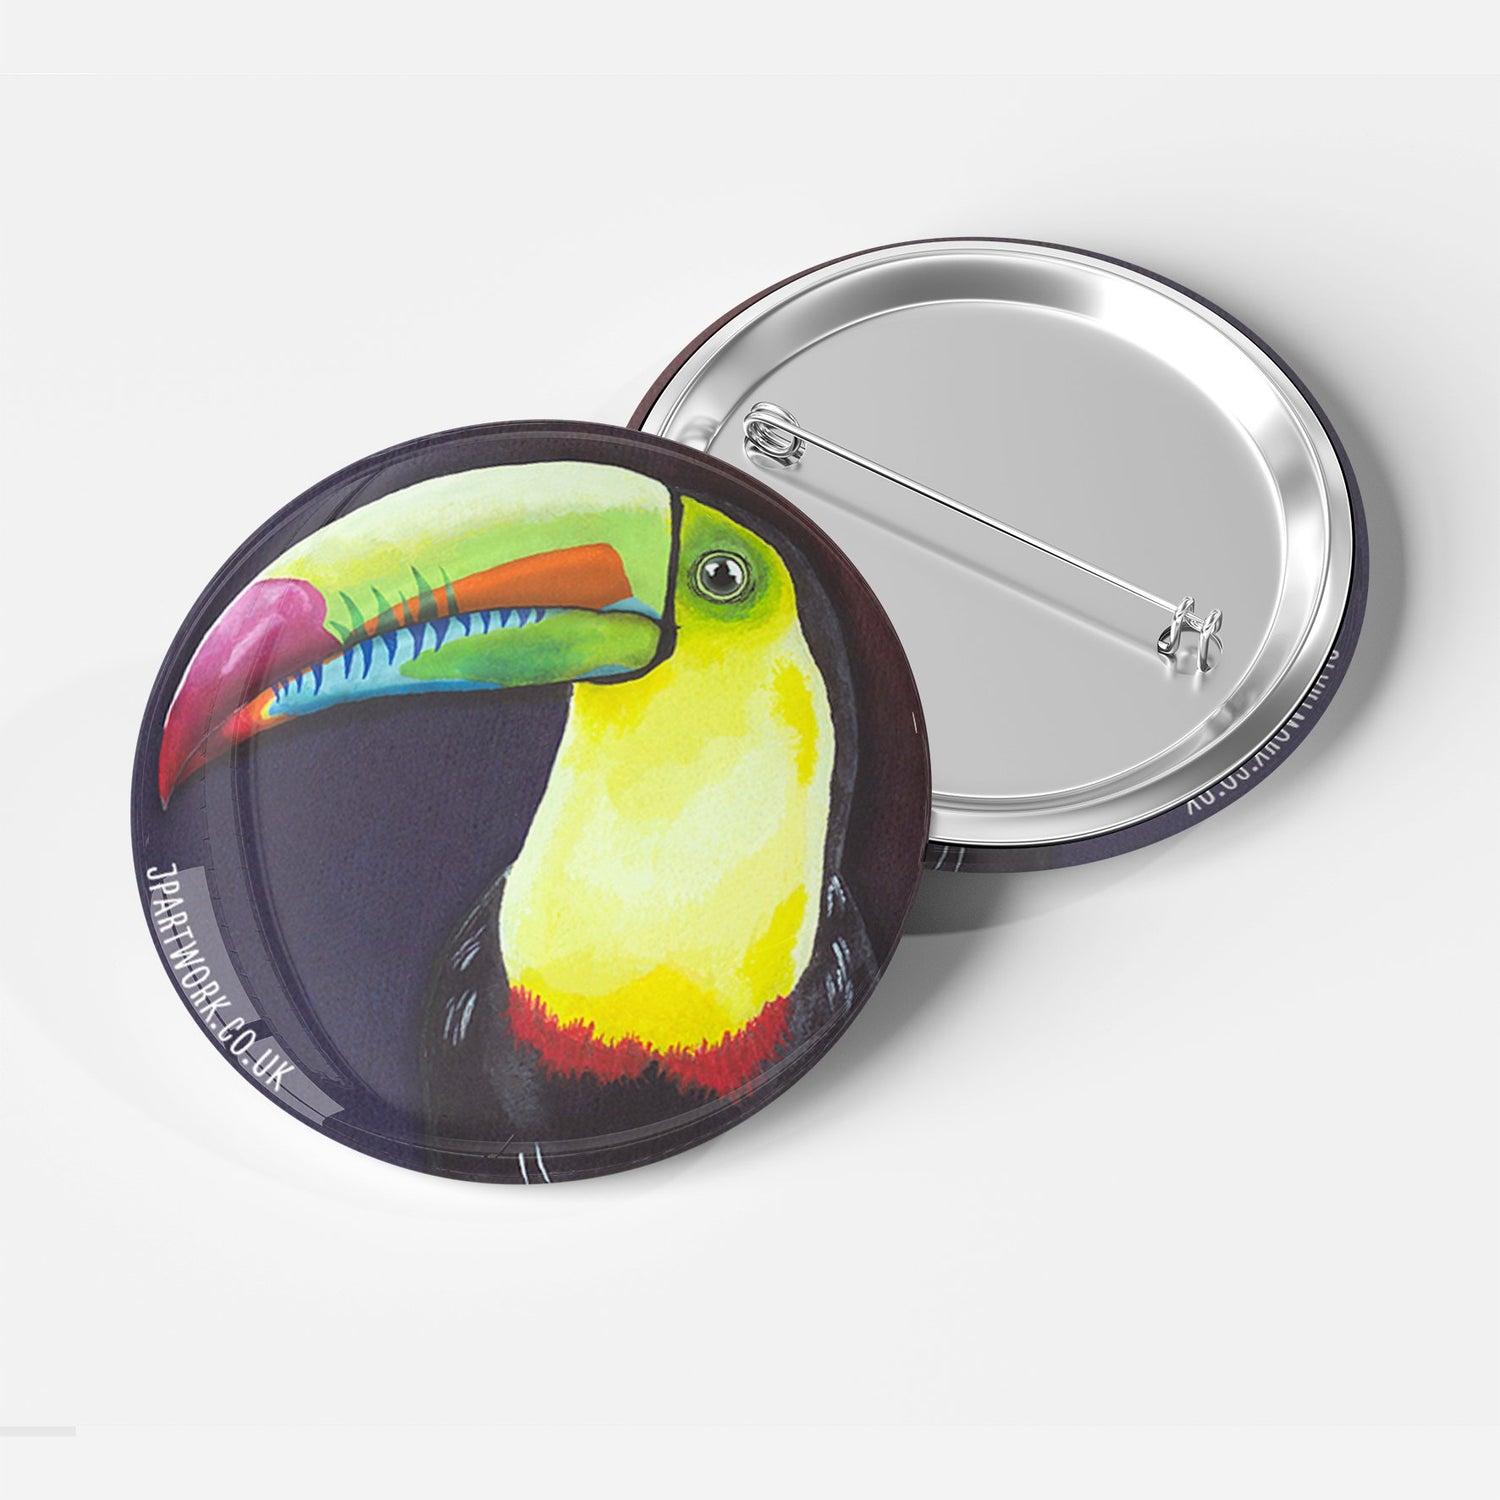 Toucan Pin Badge